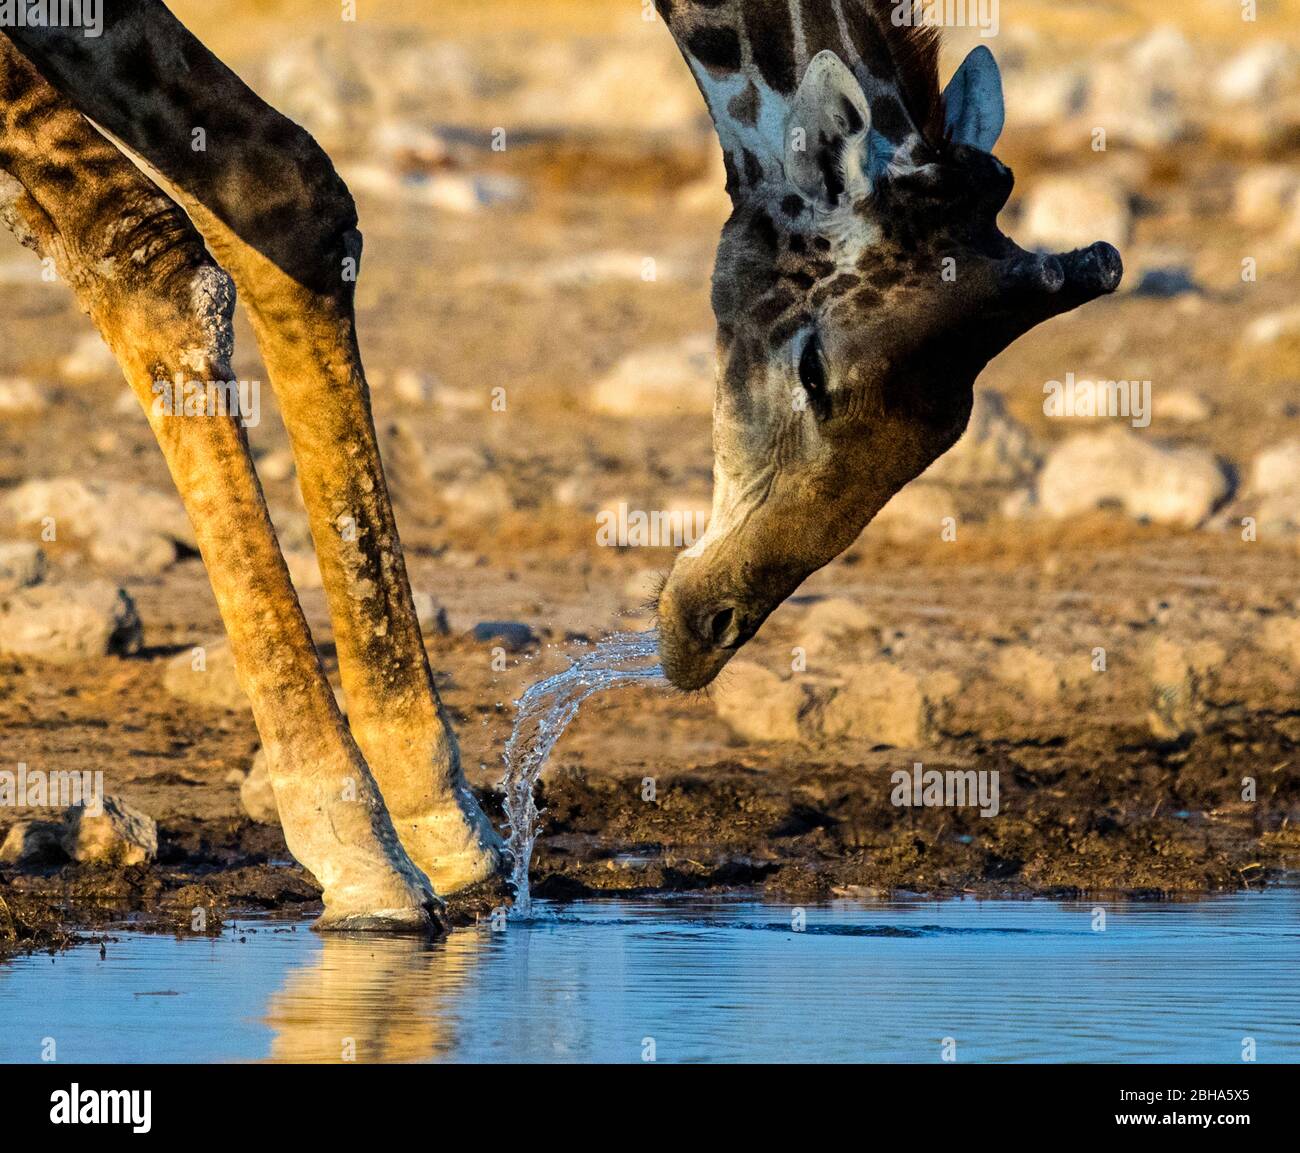 Close-up of Southern giraffe drinking water, Etosha National Park, Namibia Stock Photo